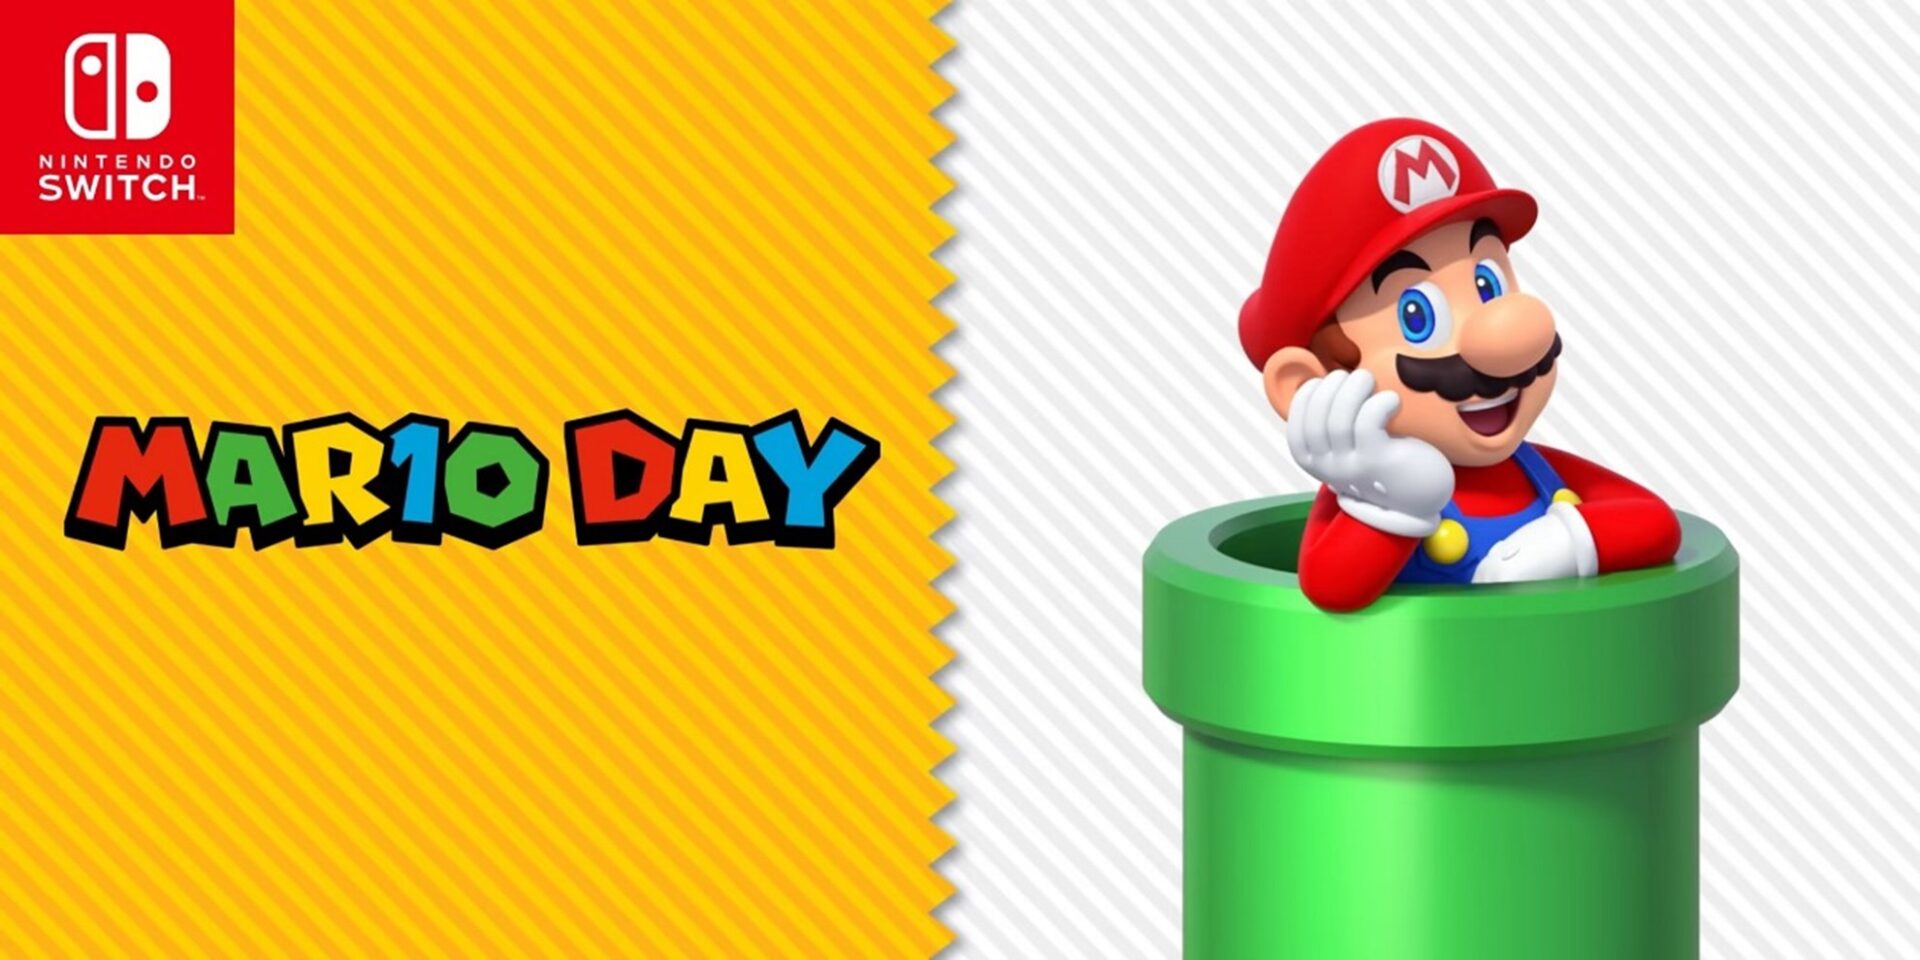 Nintendo ลดราคาเกมลุงหนวดฉลองวัน MAR10 DAY